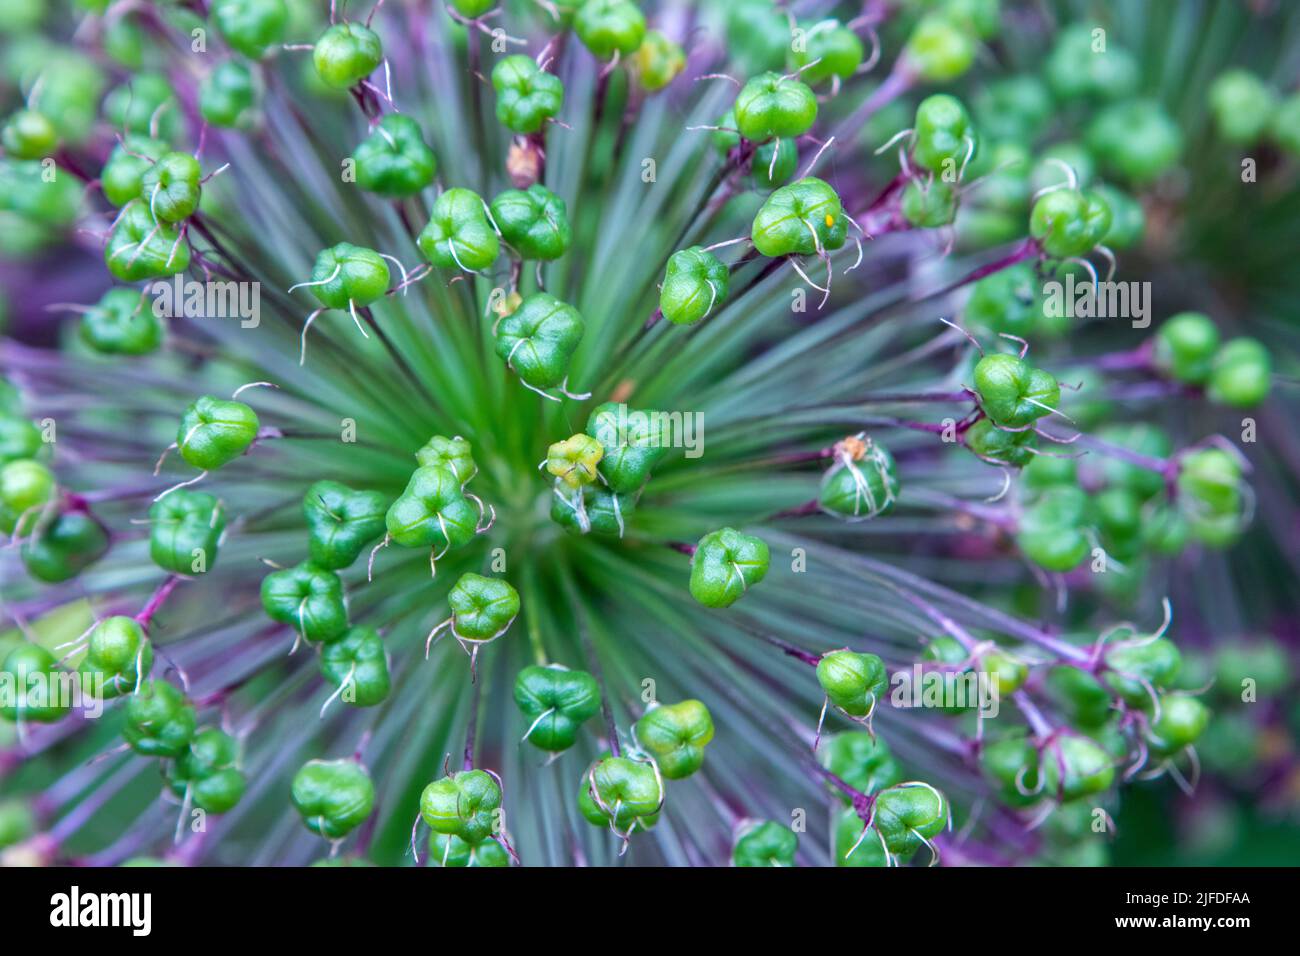 Allium seedhead Stock Photo